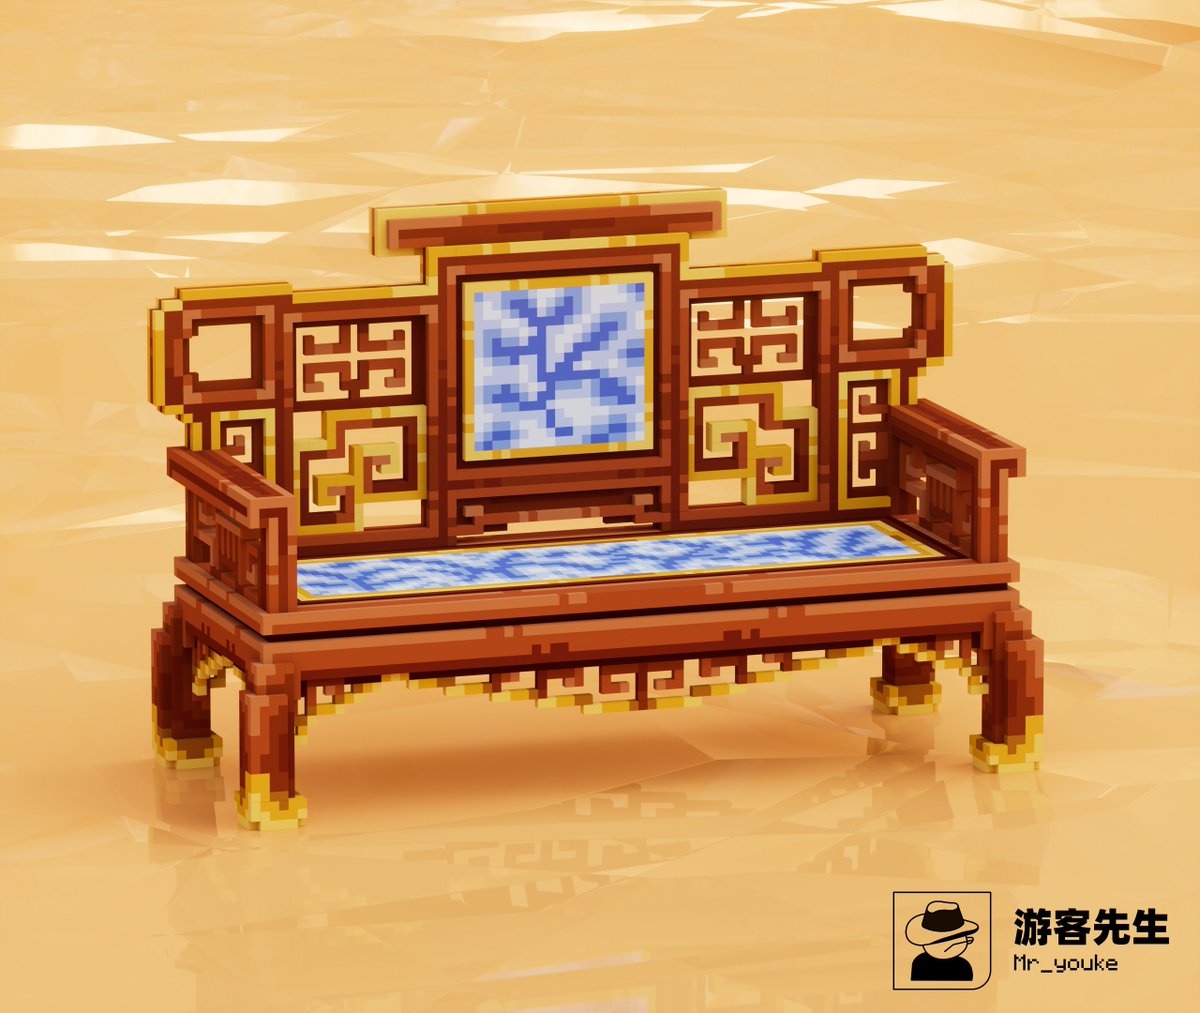 Chinese furniture series——Chinese bench

#TheSandbox #sandboxgame #voxel #voxelart #TSBCreator #VoxEdit #Metaverse #sandfam #NFTartwork #3Dartist #3dartwork #crypto #3D #dragons